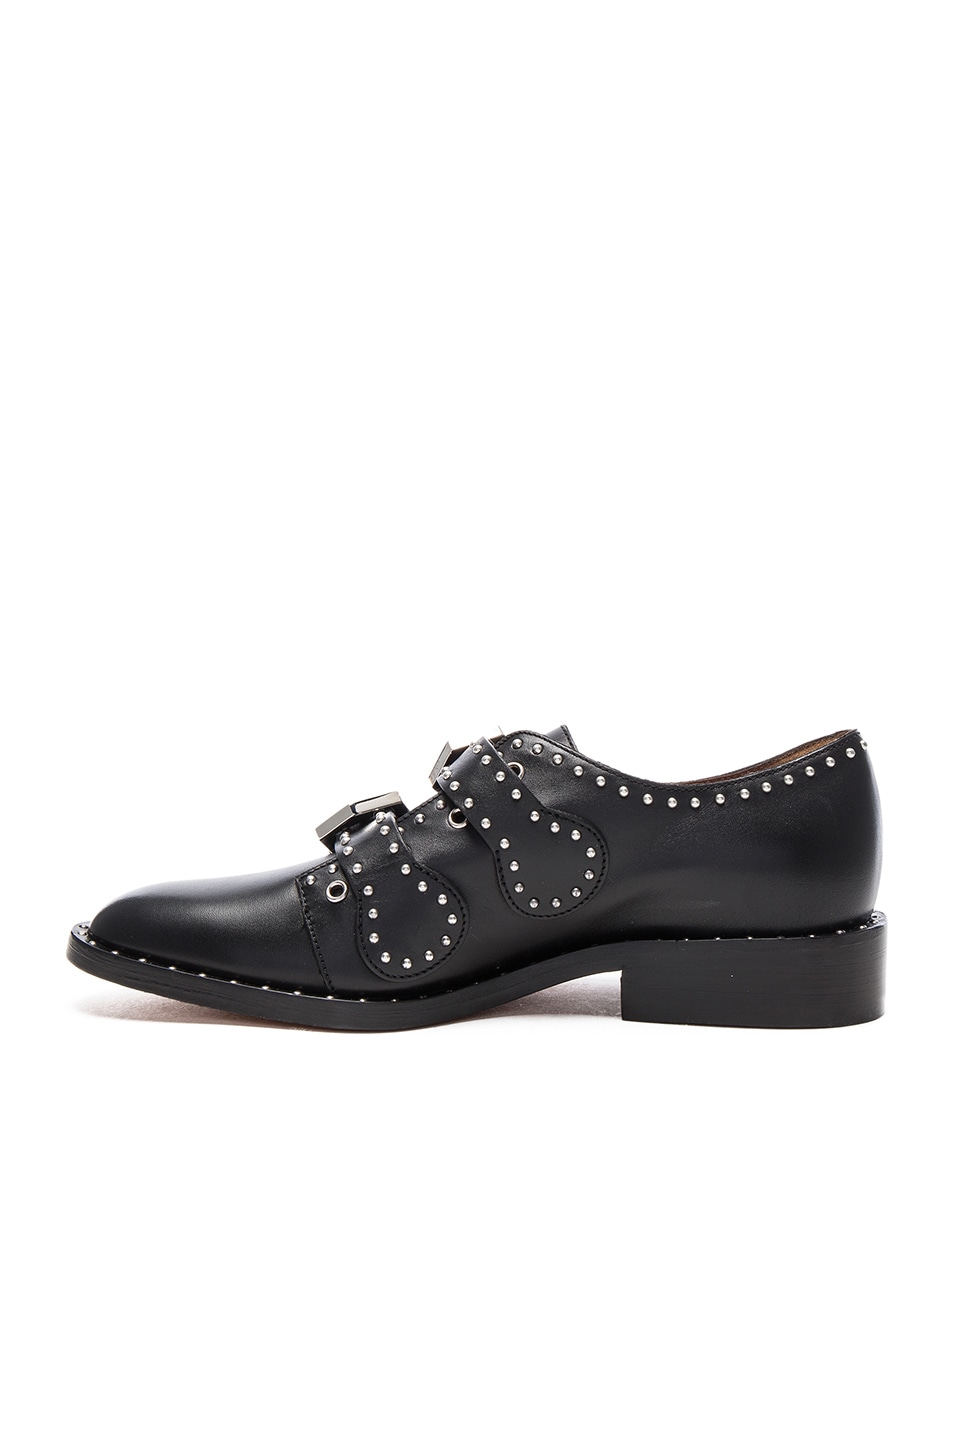 GIVENCHY Elegant Embellished Leather Monk Strap Shoes in Black | ModeSens